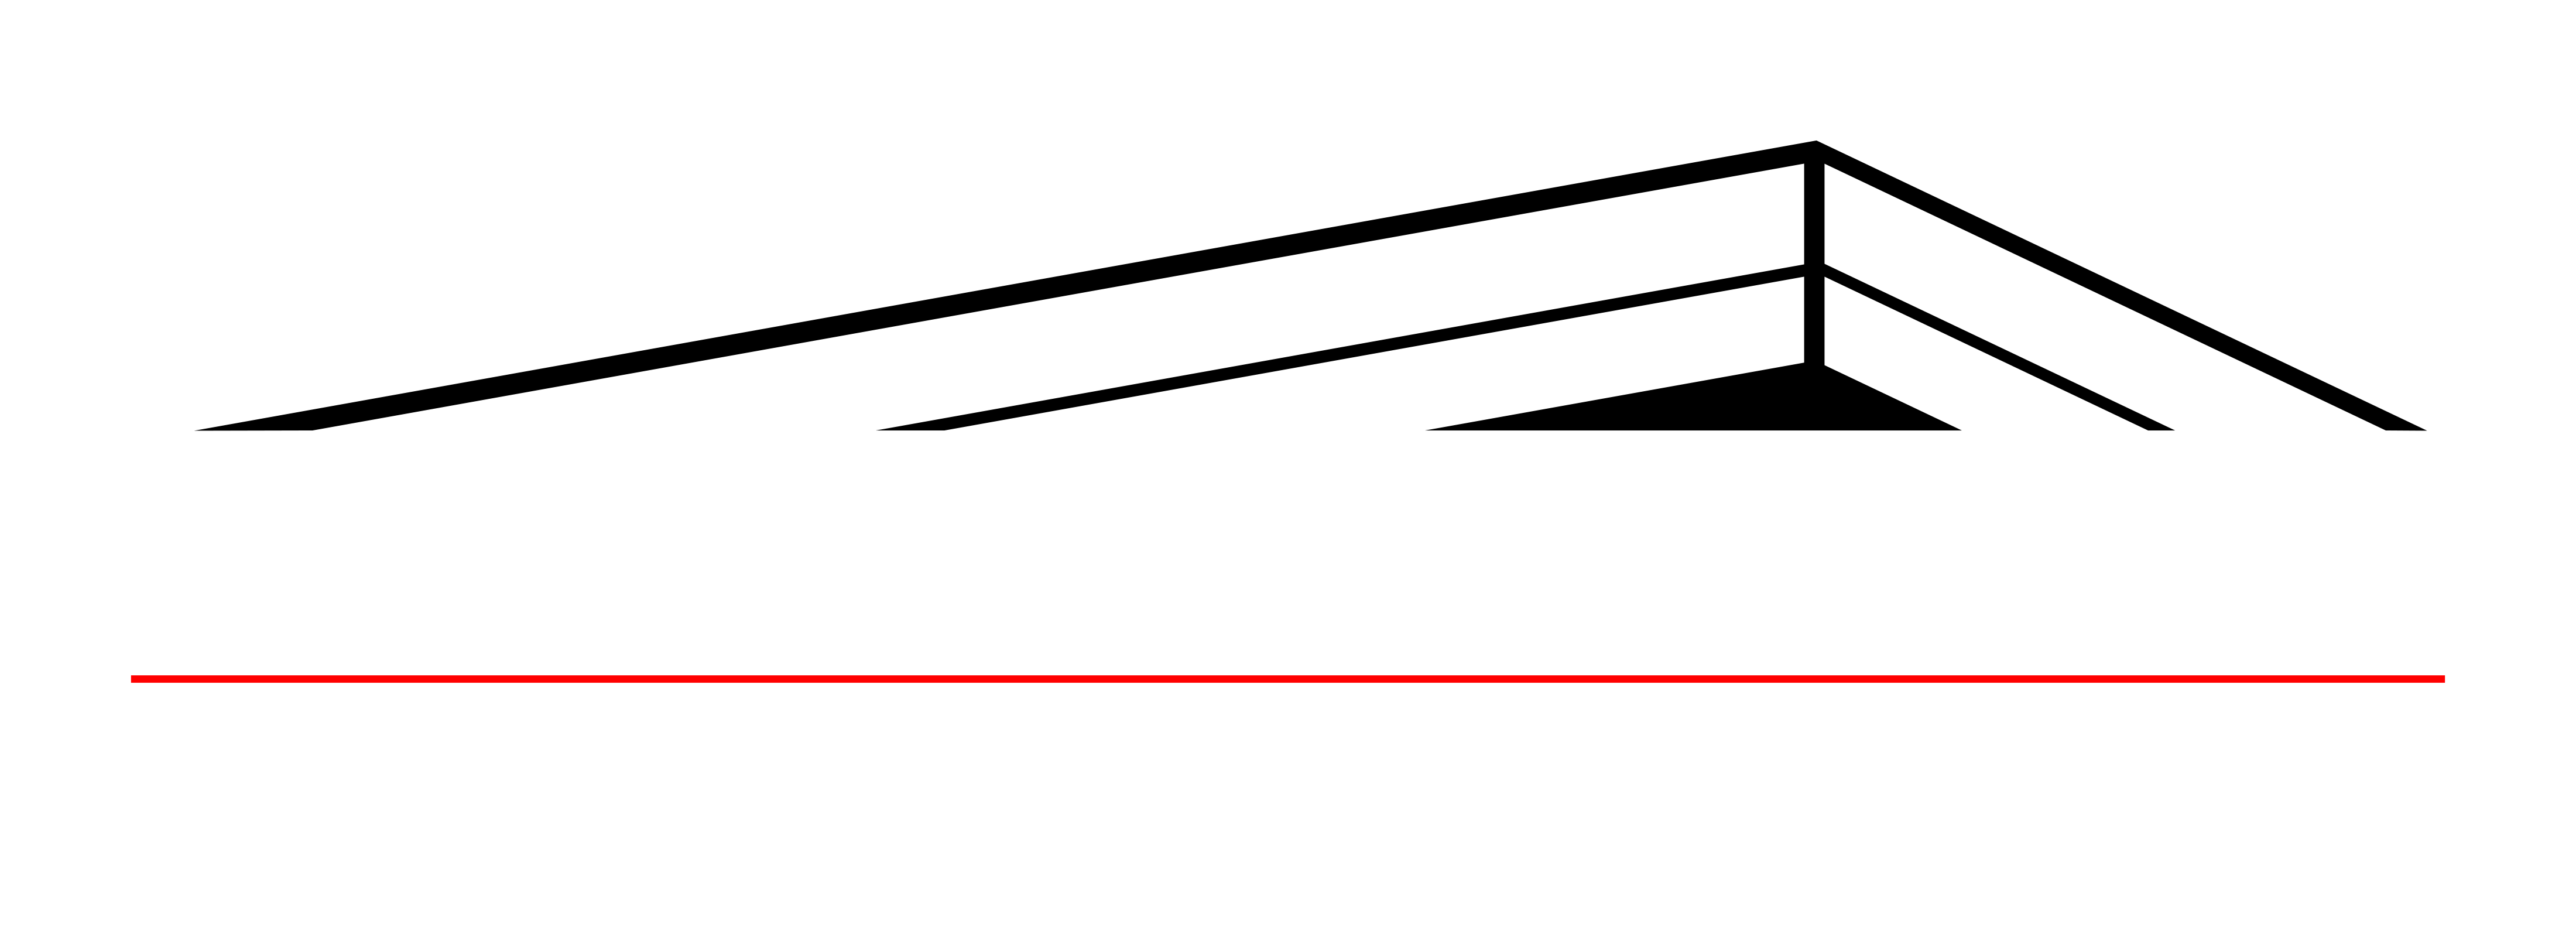 Sky High Logo Revised 3